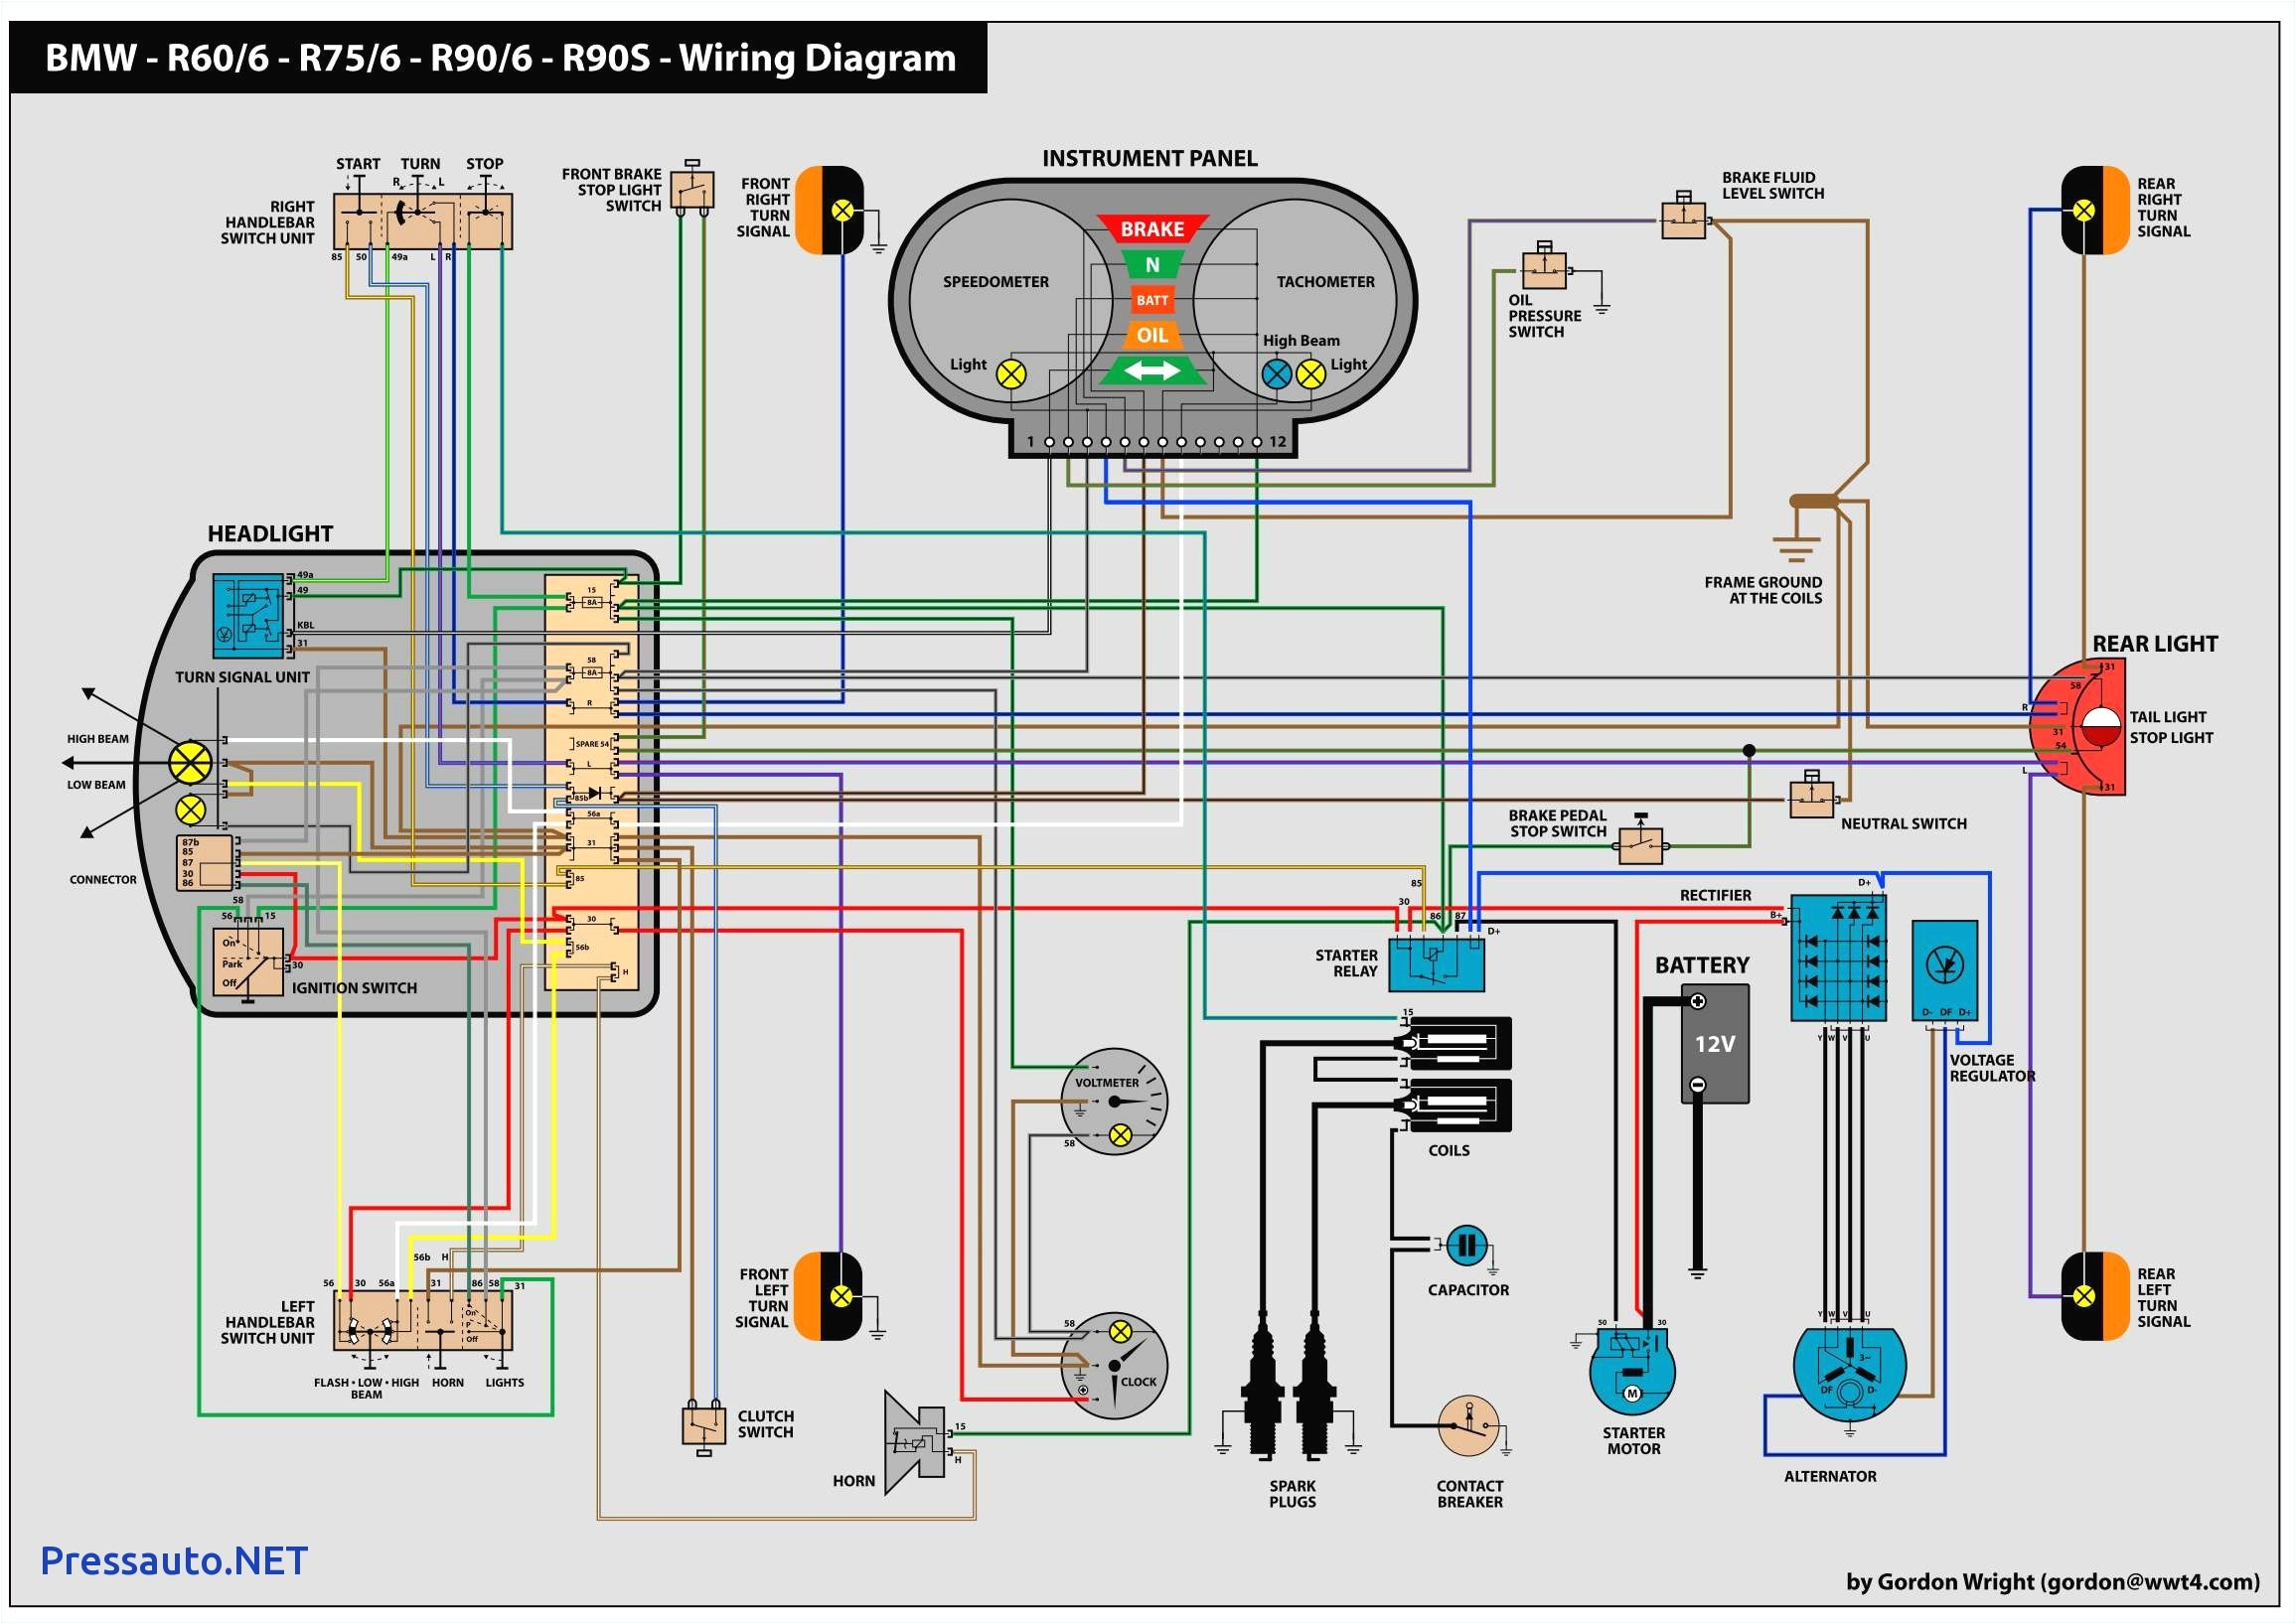 bmw wiring diagrams wiring diagram show wds bmw wiring diagram system free download bmw wire diagram